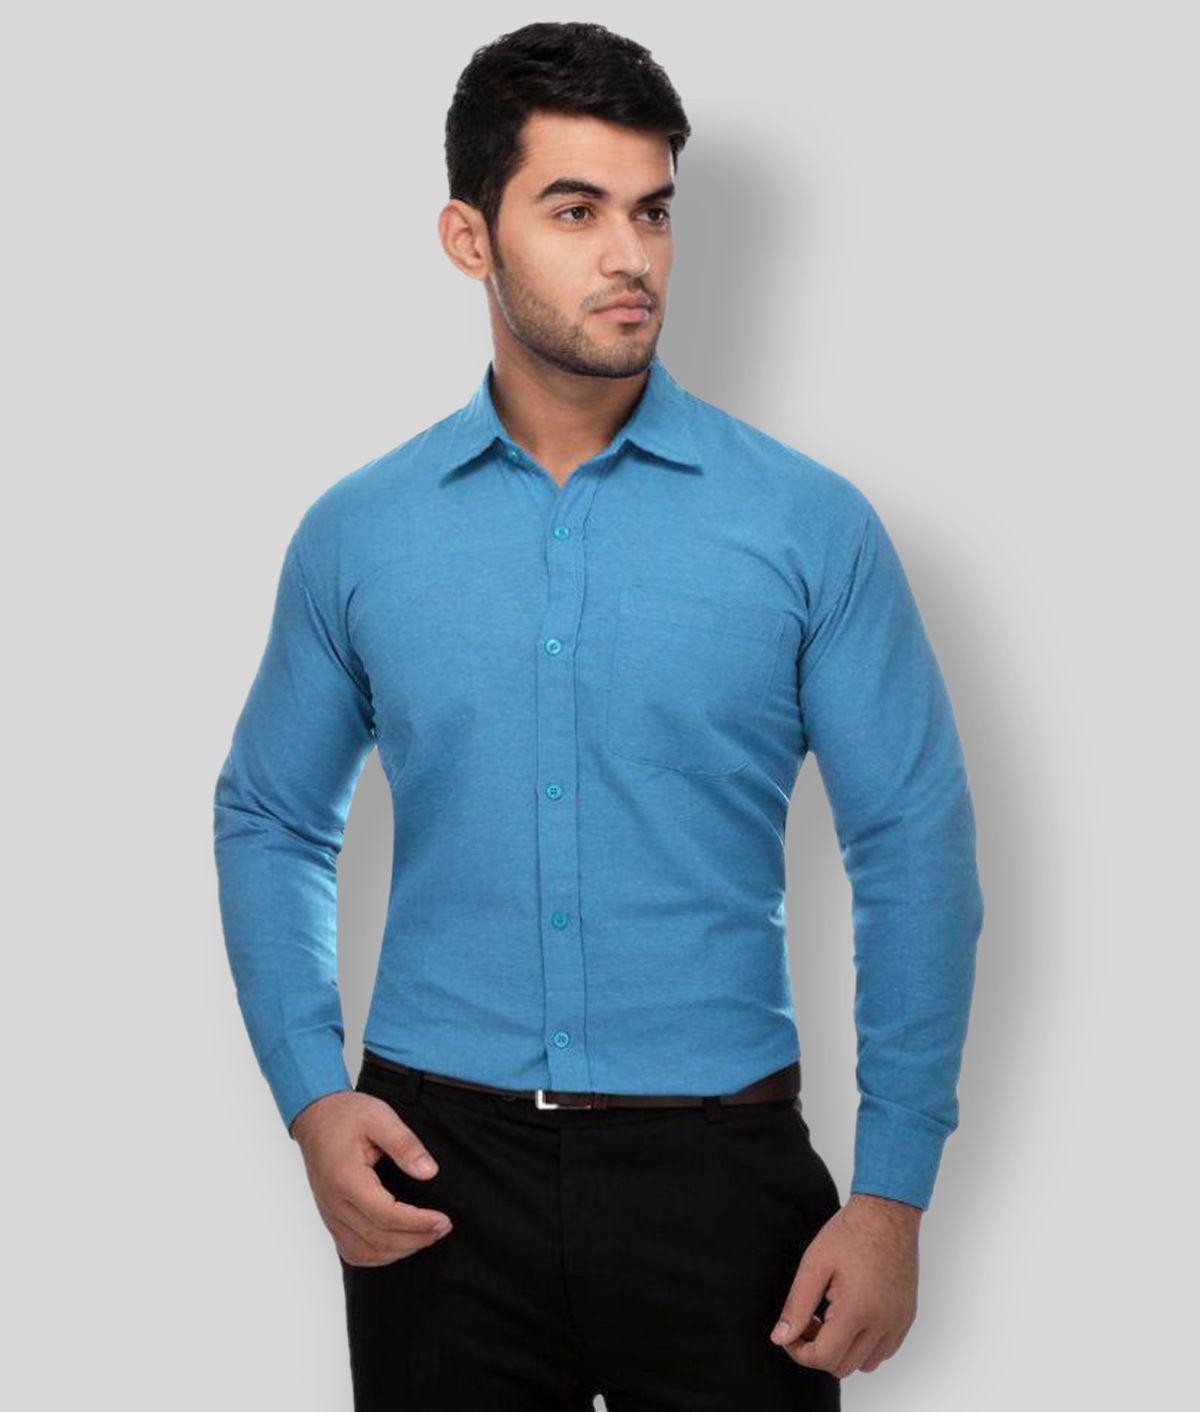     			DESHBANDHU DBK - Blue Cotton Regular Fit Men's Casual Shirt (Pack of 1 )